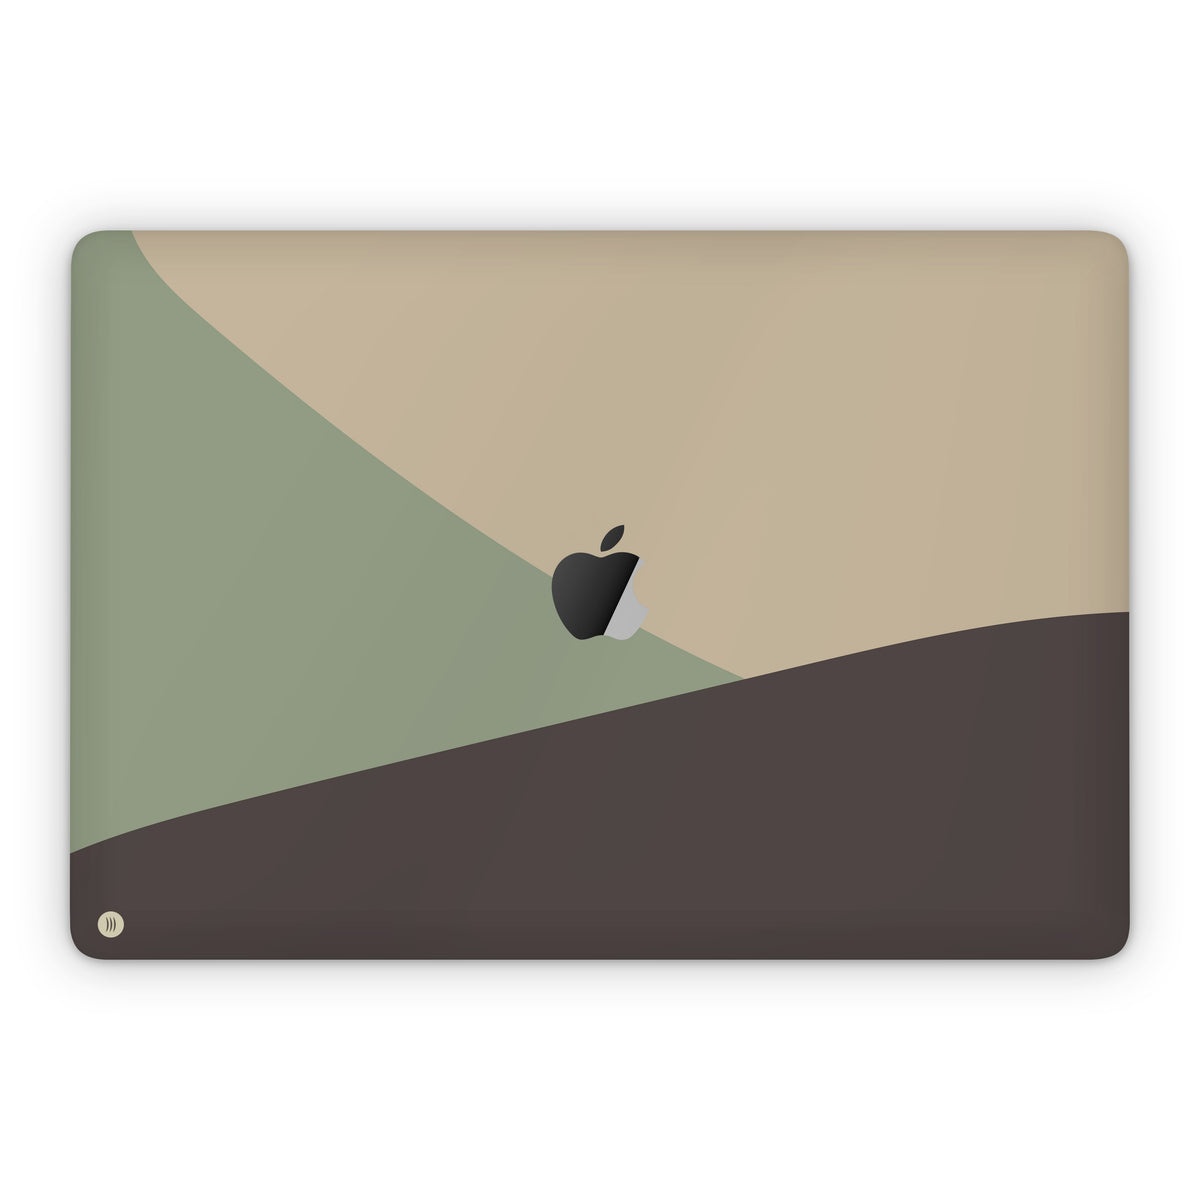 Yosemite (MacBook Skin)